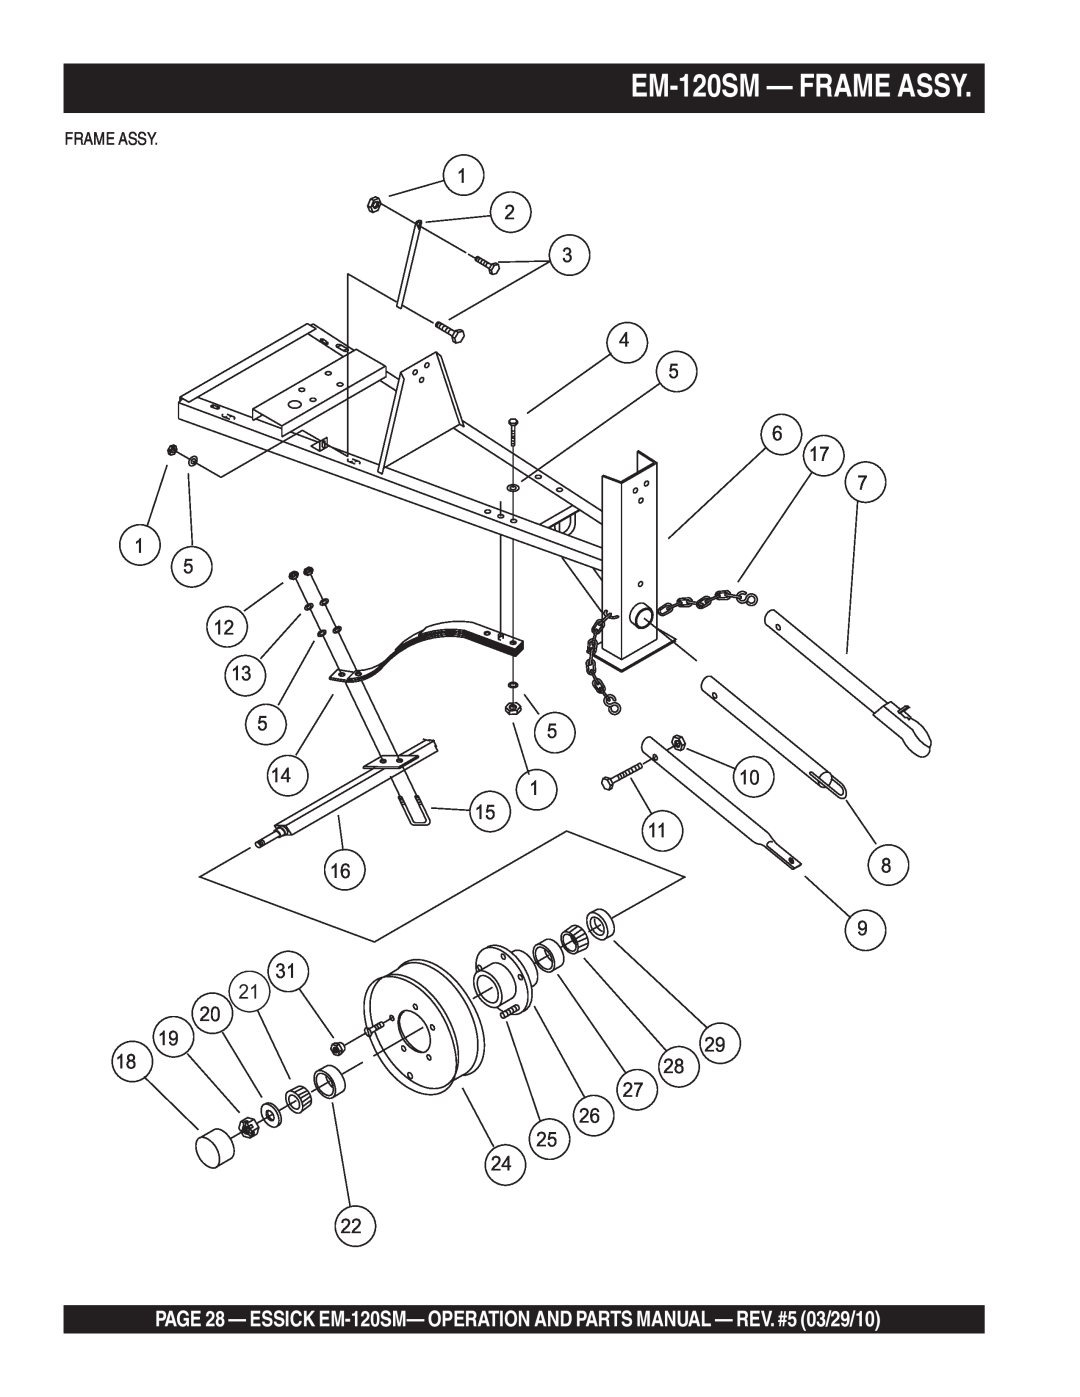 Multiquip manual EM-120SM- FRAME ASSY, 1 2 3 1, 14 1 15 16 31 21, 4 5 6 17 7 10 11 8, Frame Assy 